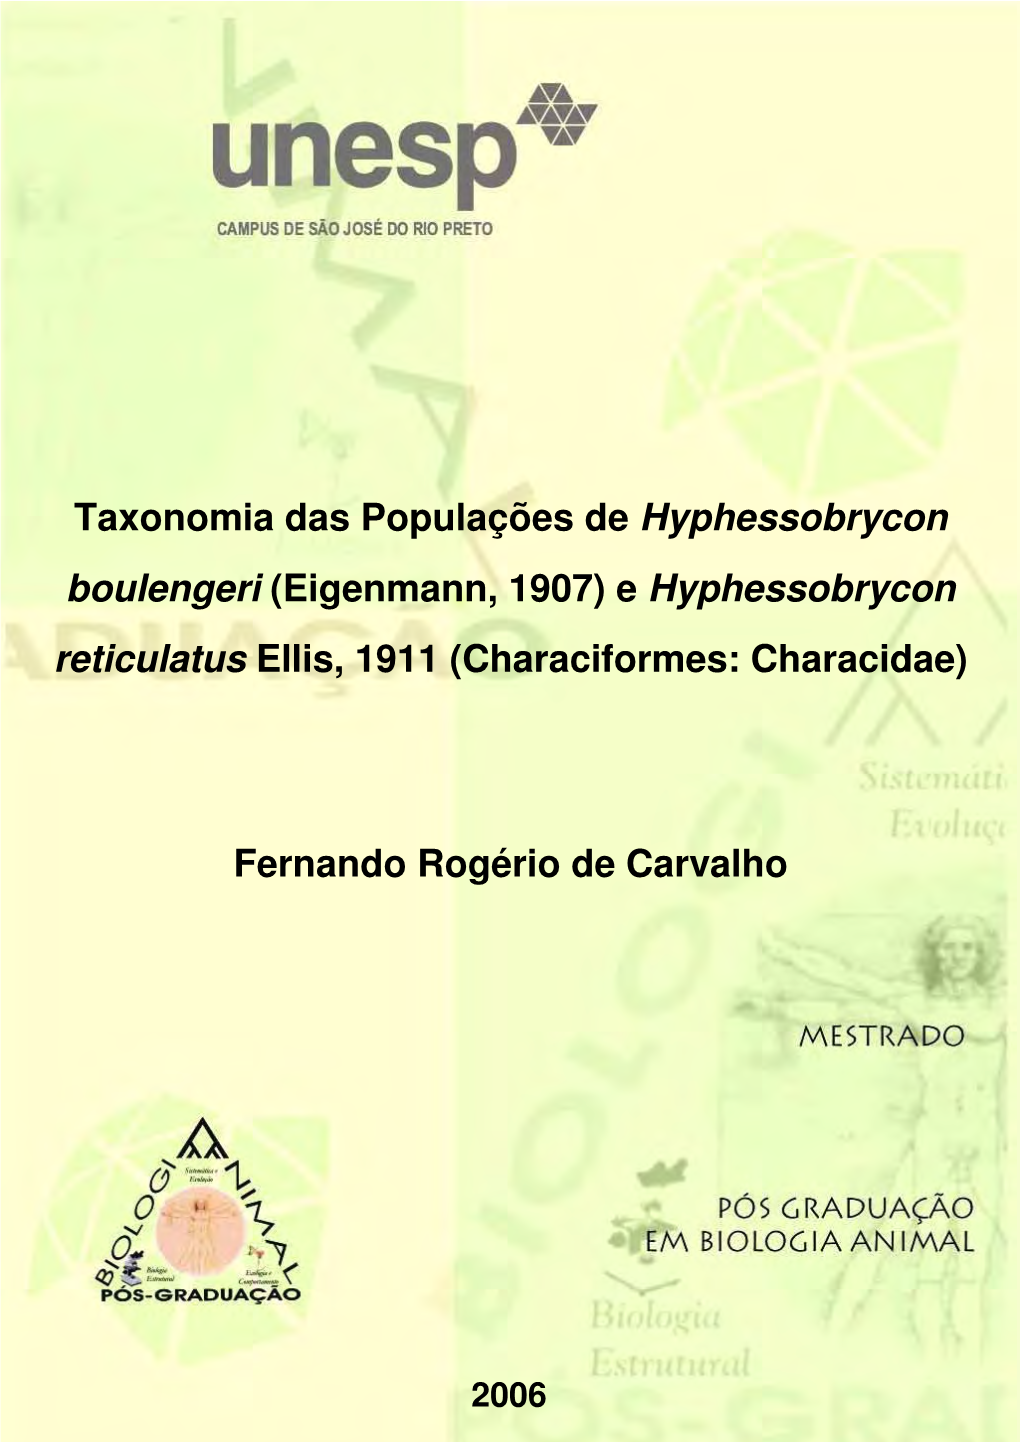 E Hyphessobrycon Reticulatus Ellis, 1911 (Characiformes: Characidae)